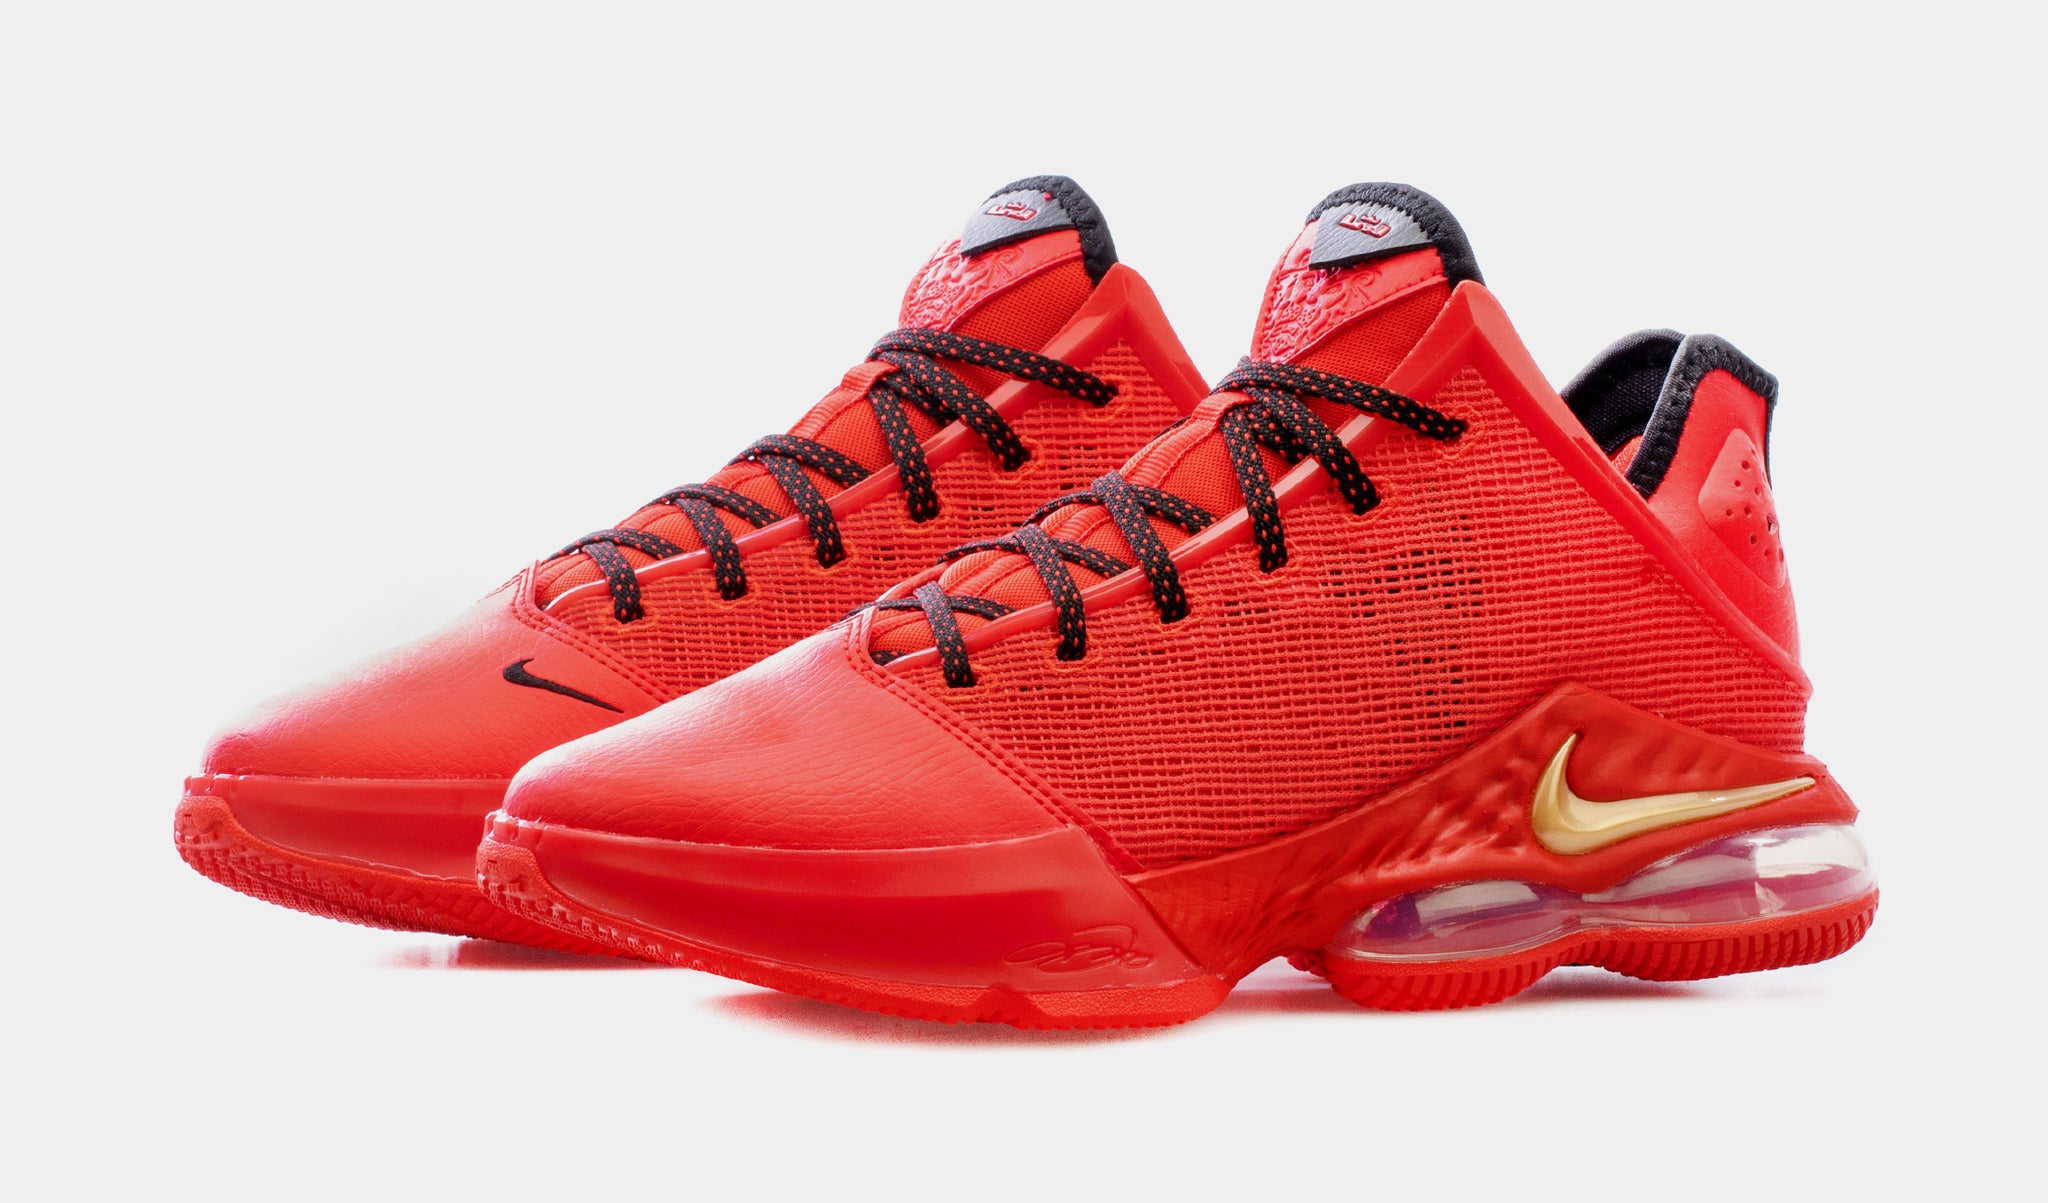 Nike Men's LeBron 19 Basketball Shoes in Orange, Size: 14 | Dc9338-800